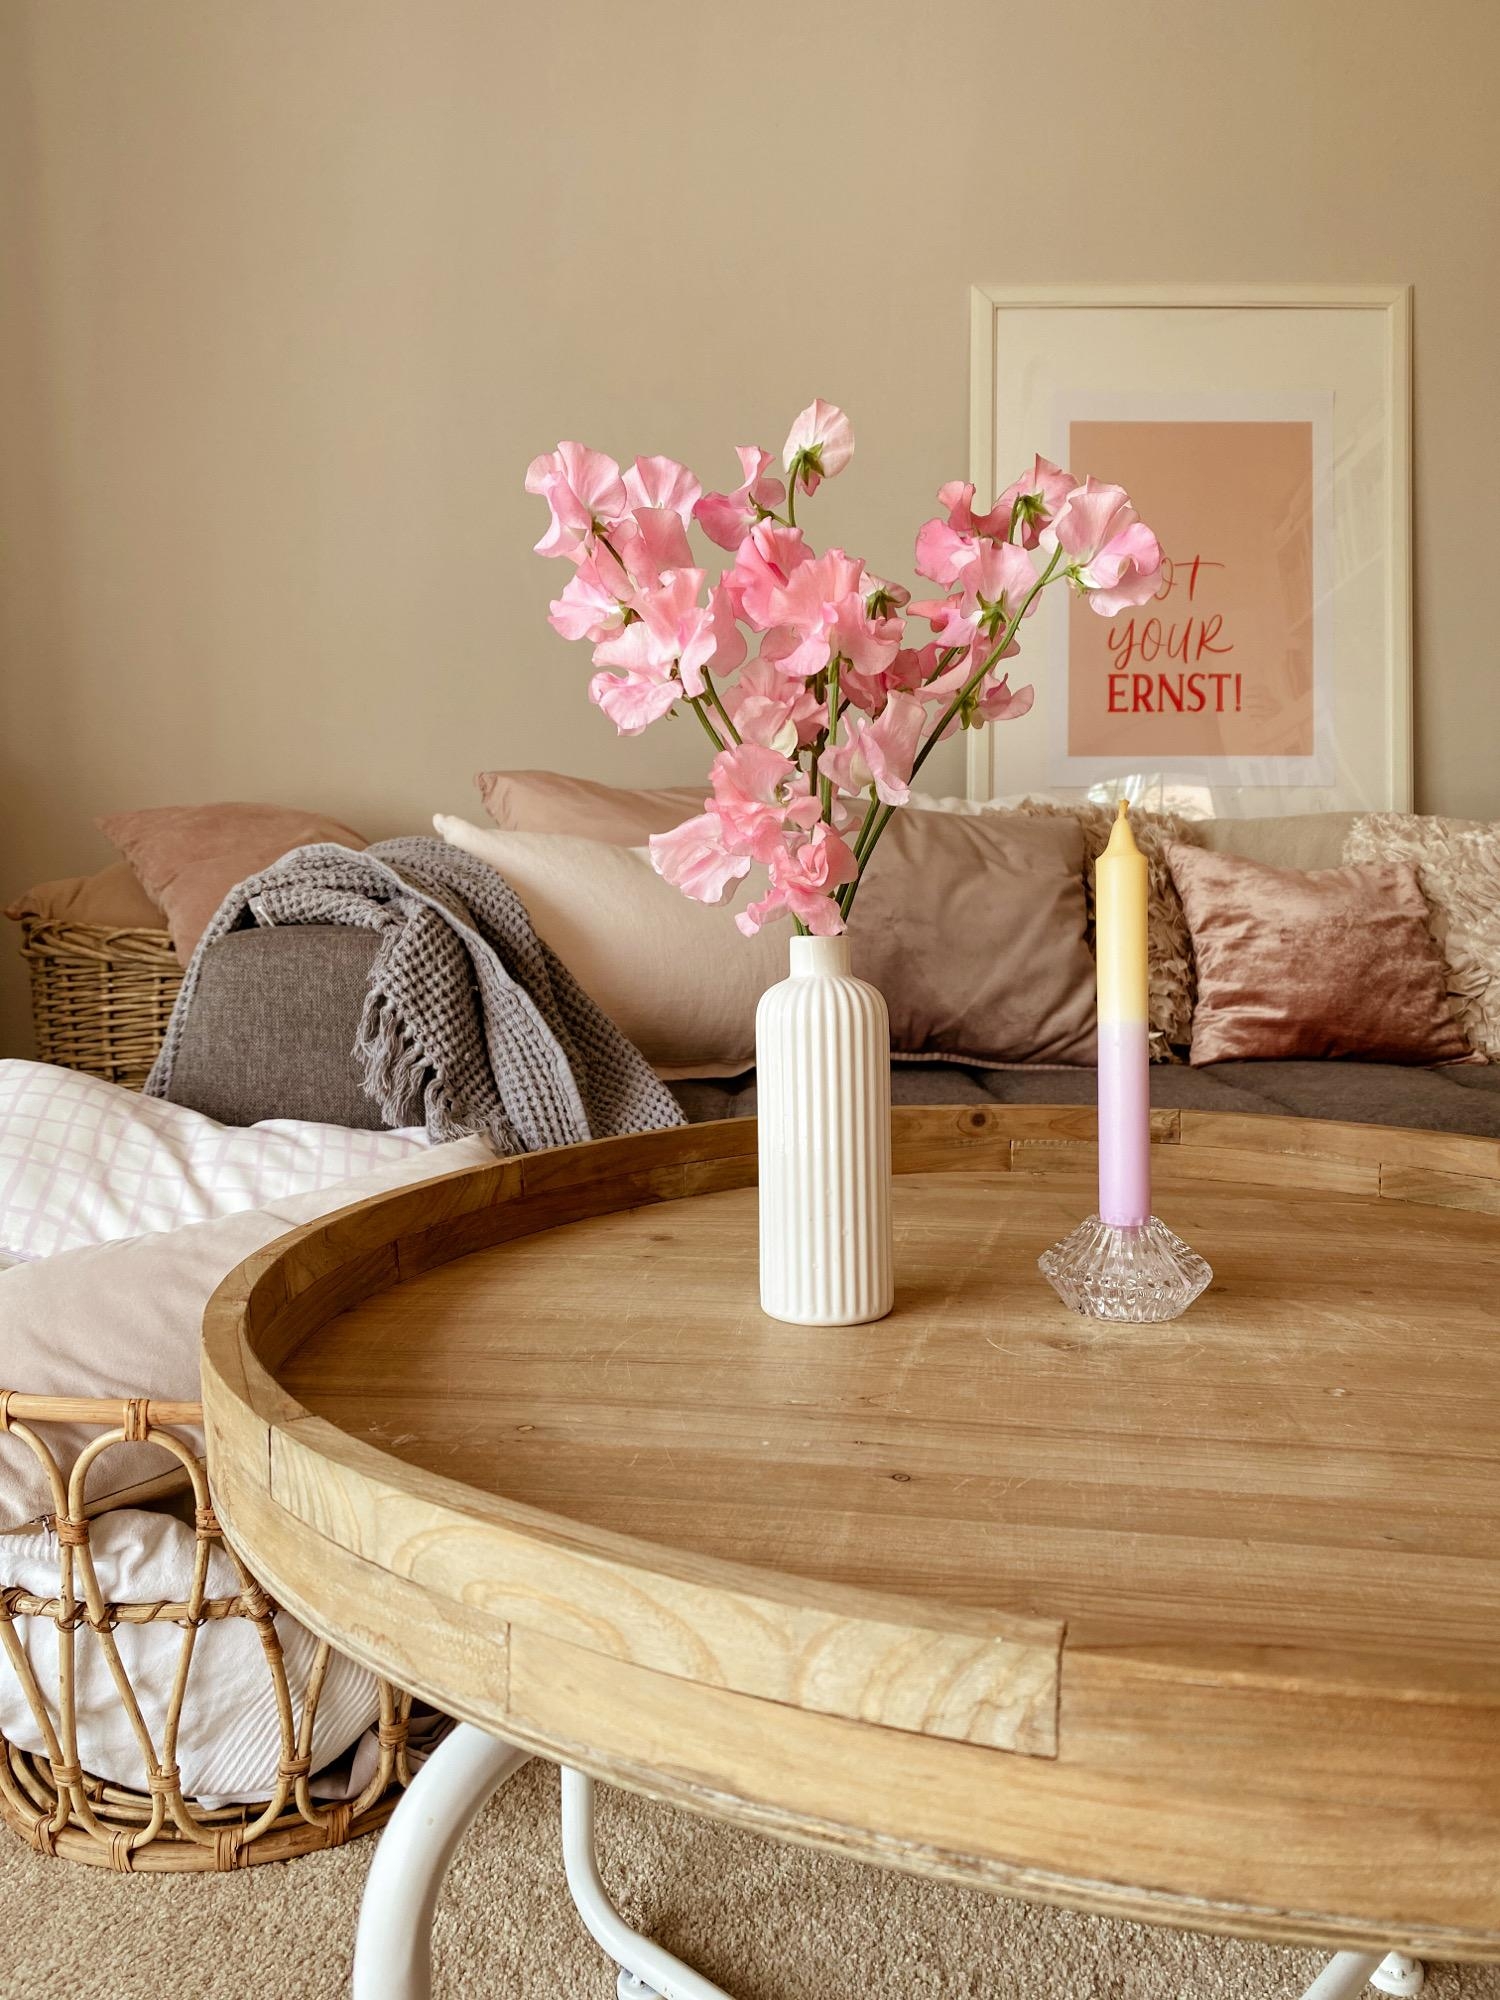 #wohnzimmer#couchstyle#freshflowers#hygge#homestyle#rosarosa#livingroom#cozy